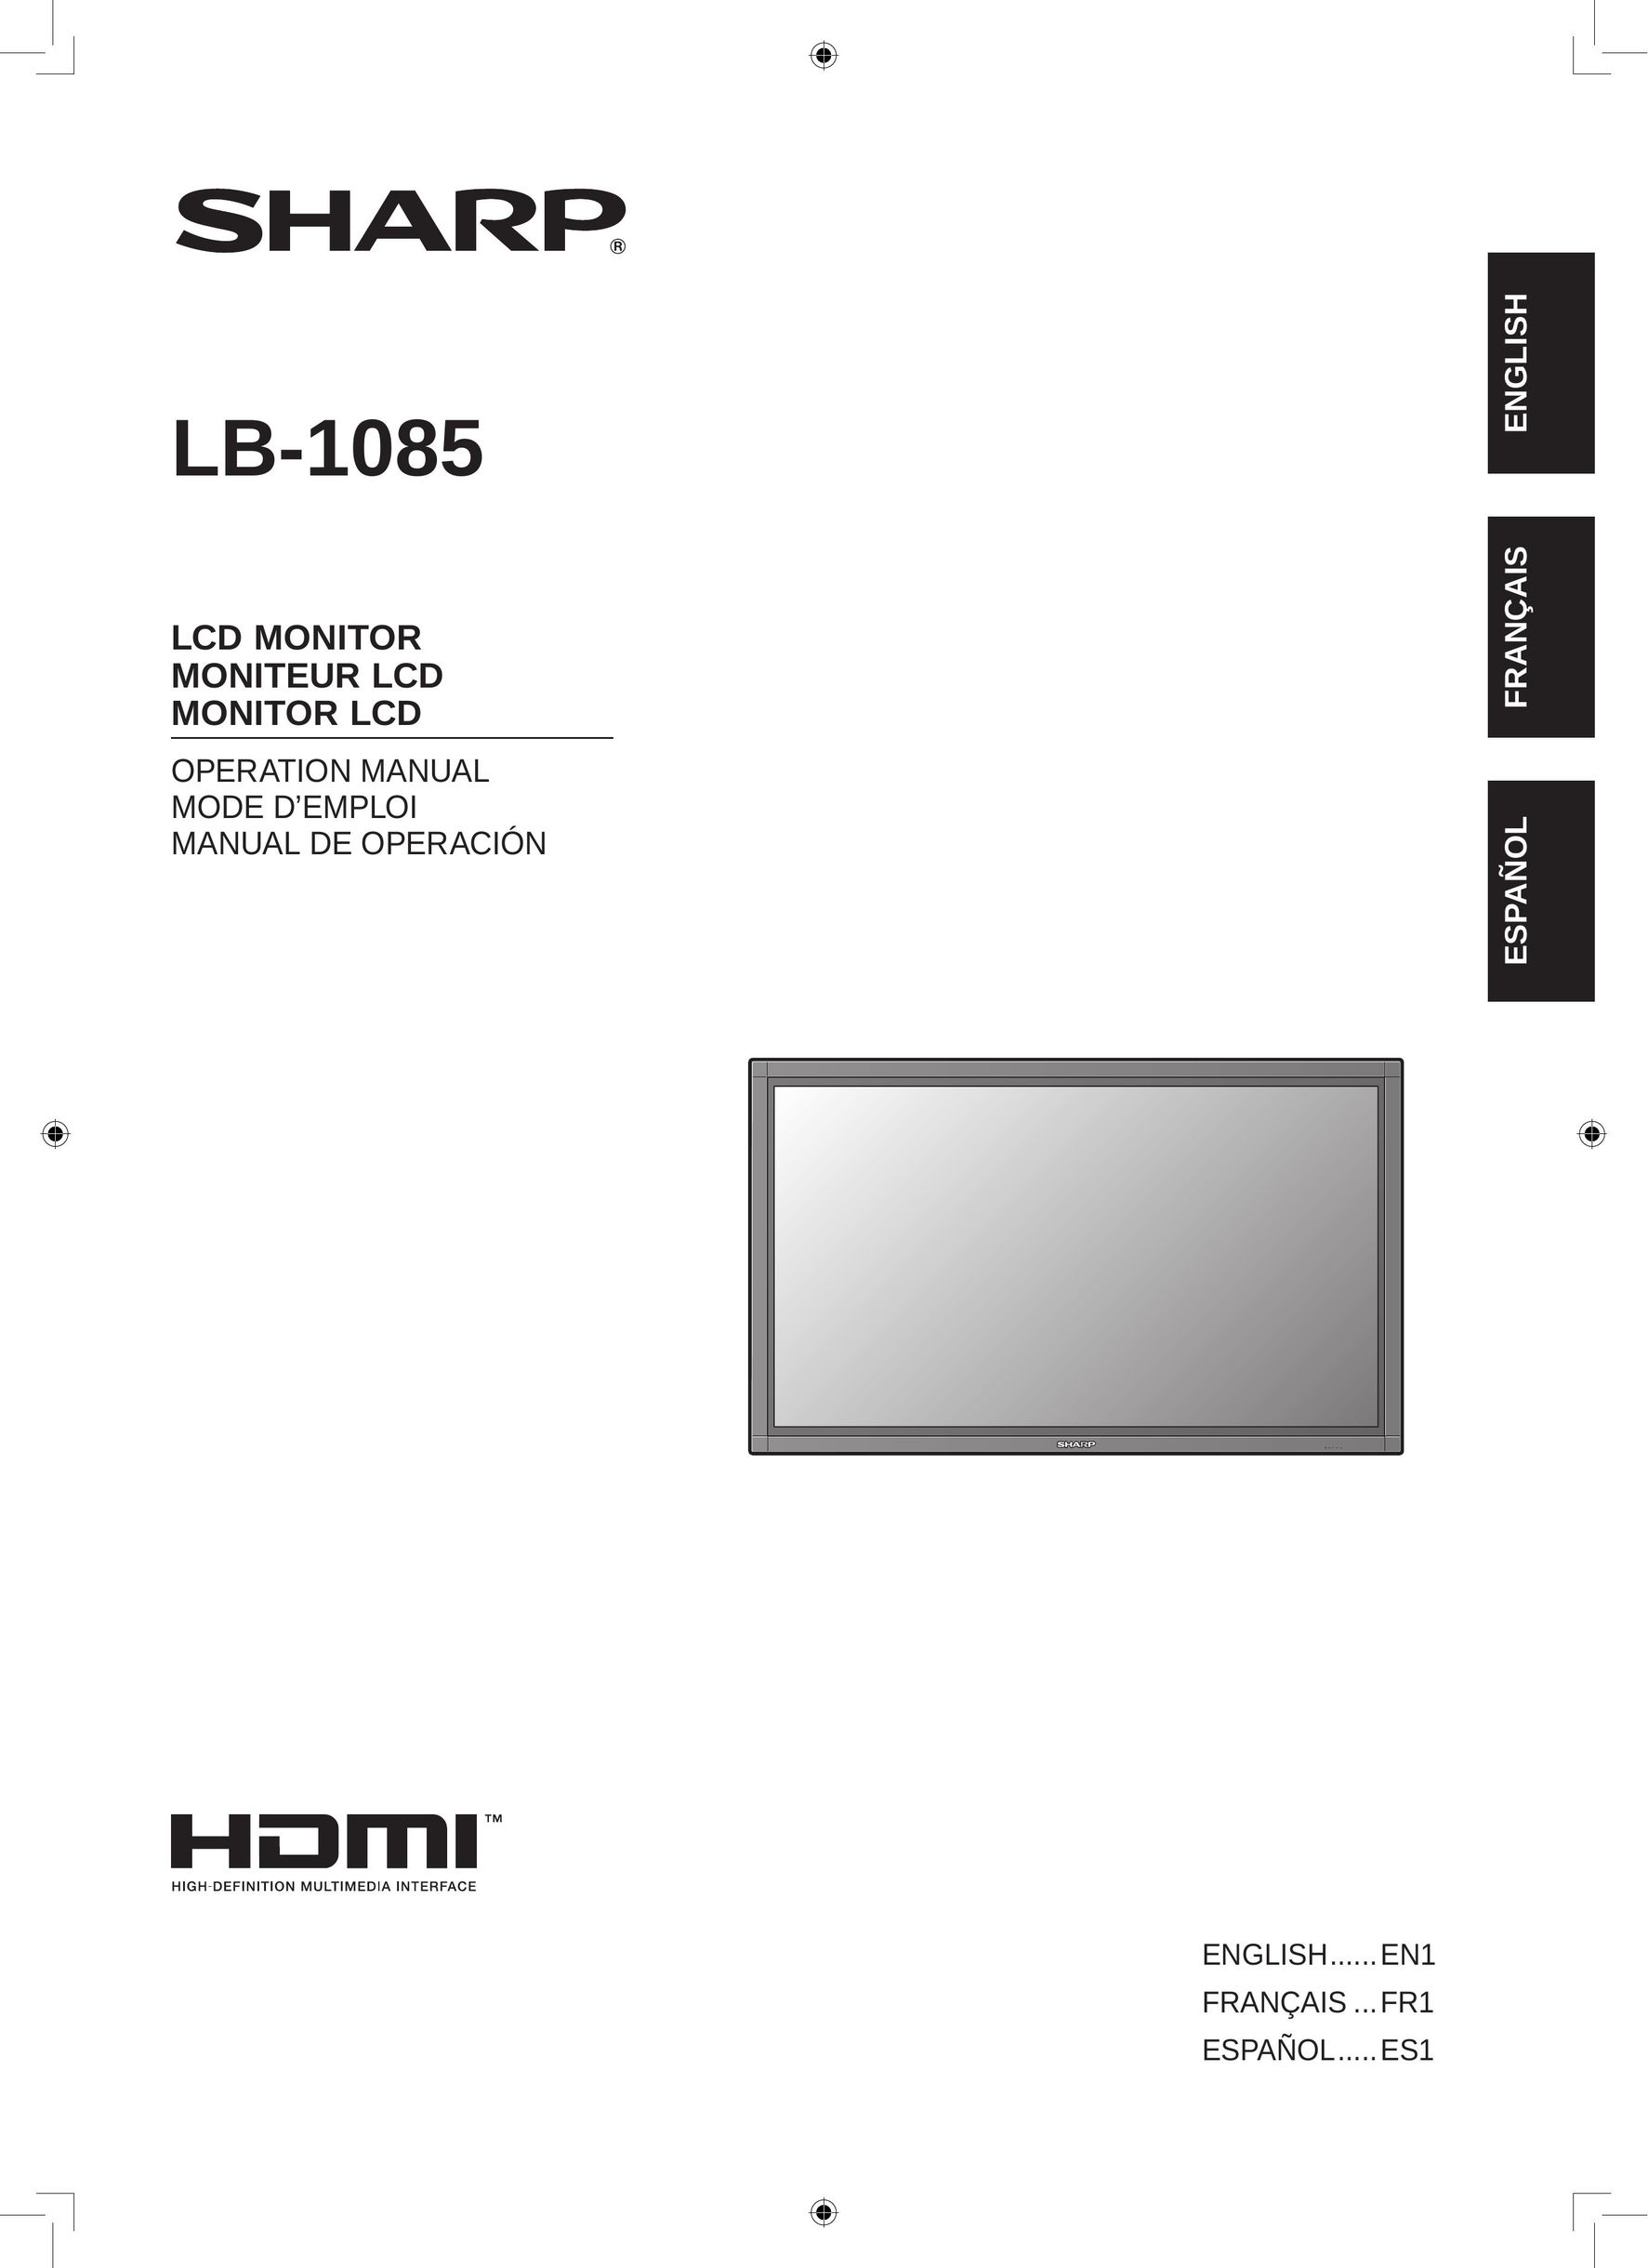 Sharp LB-1085 Flat Panel Television User Manual